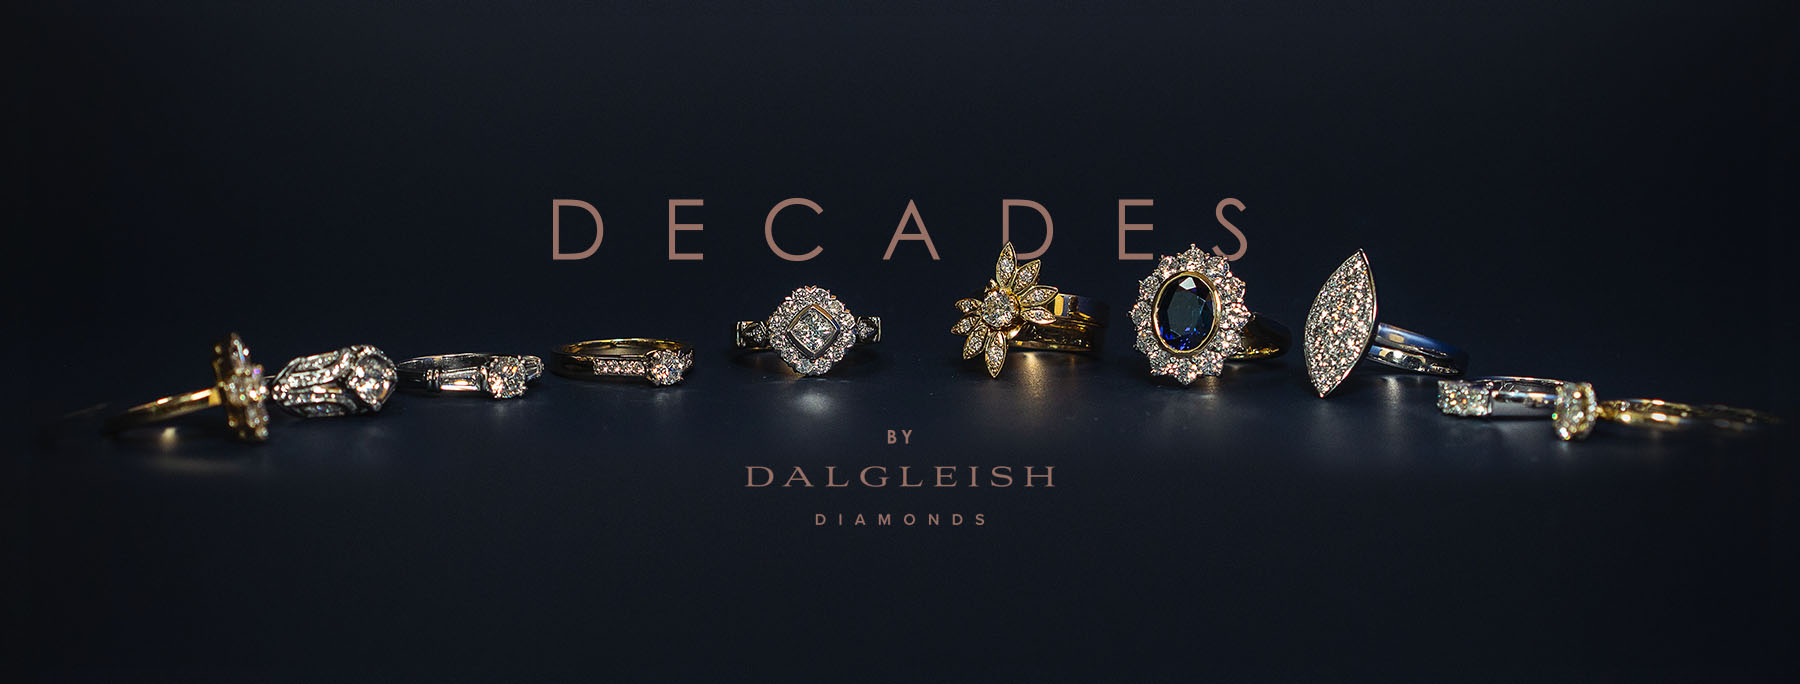 Dalgleish diamonds decades web